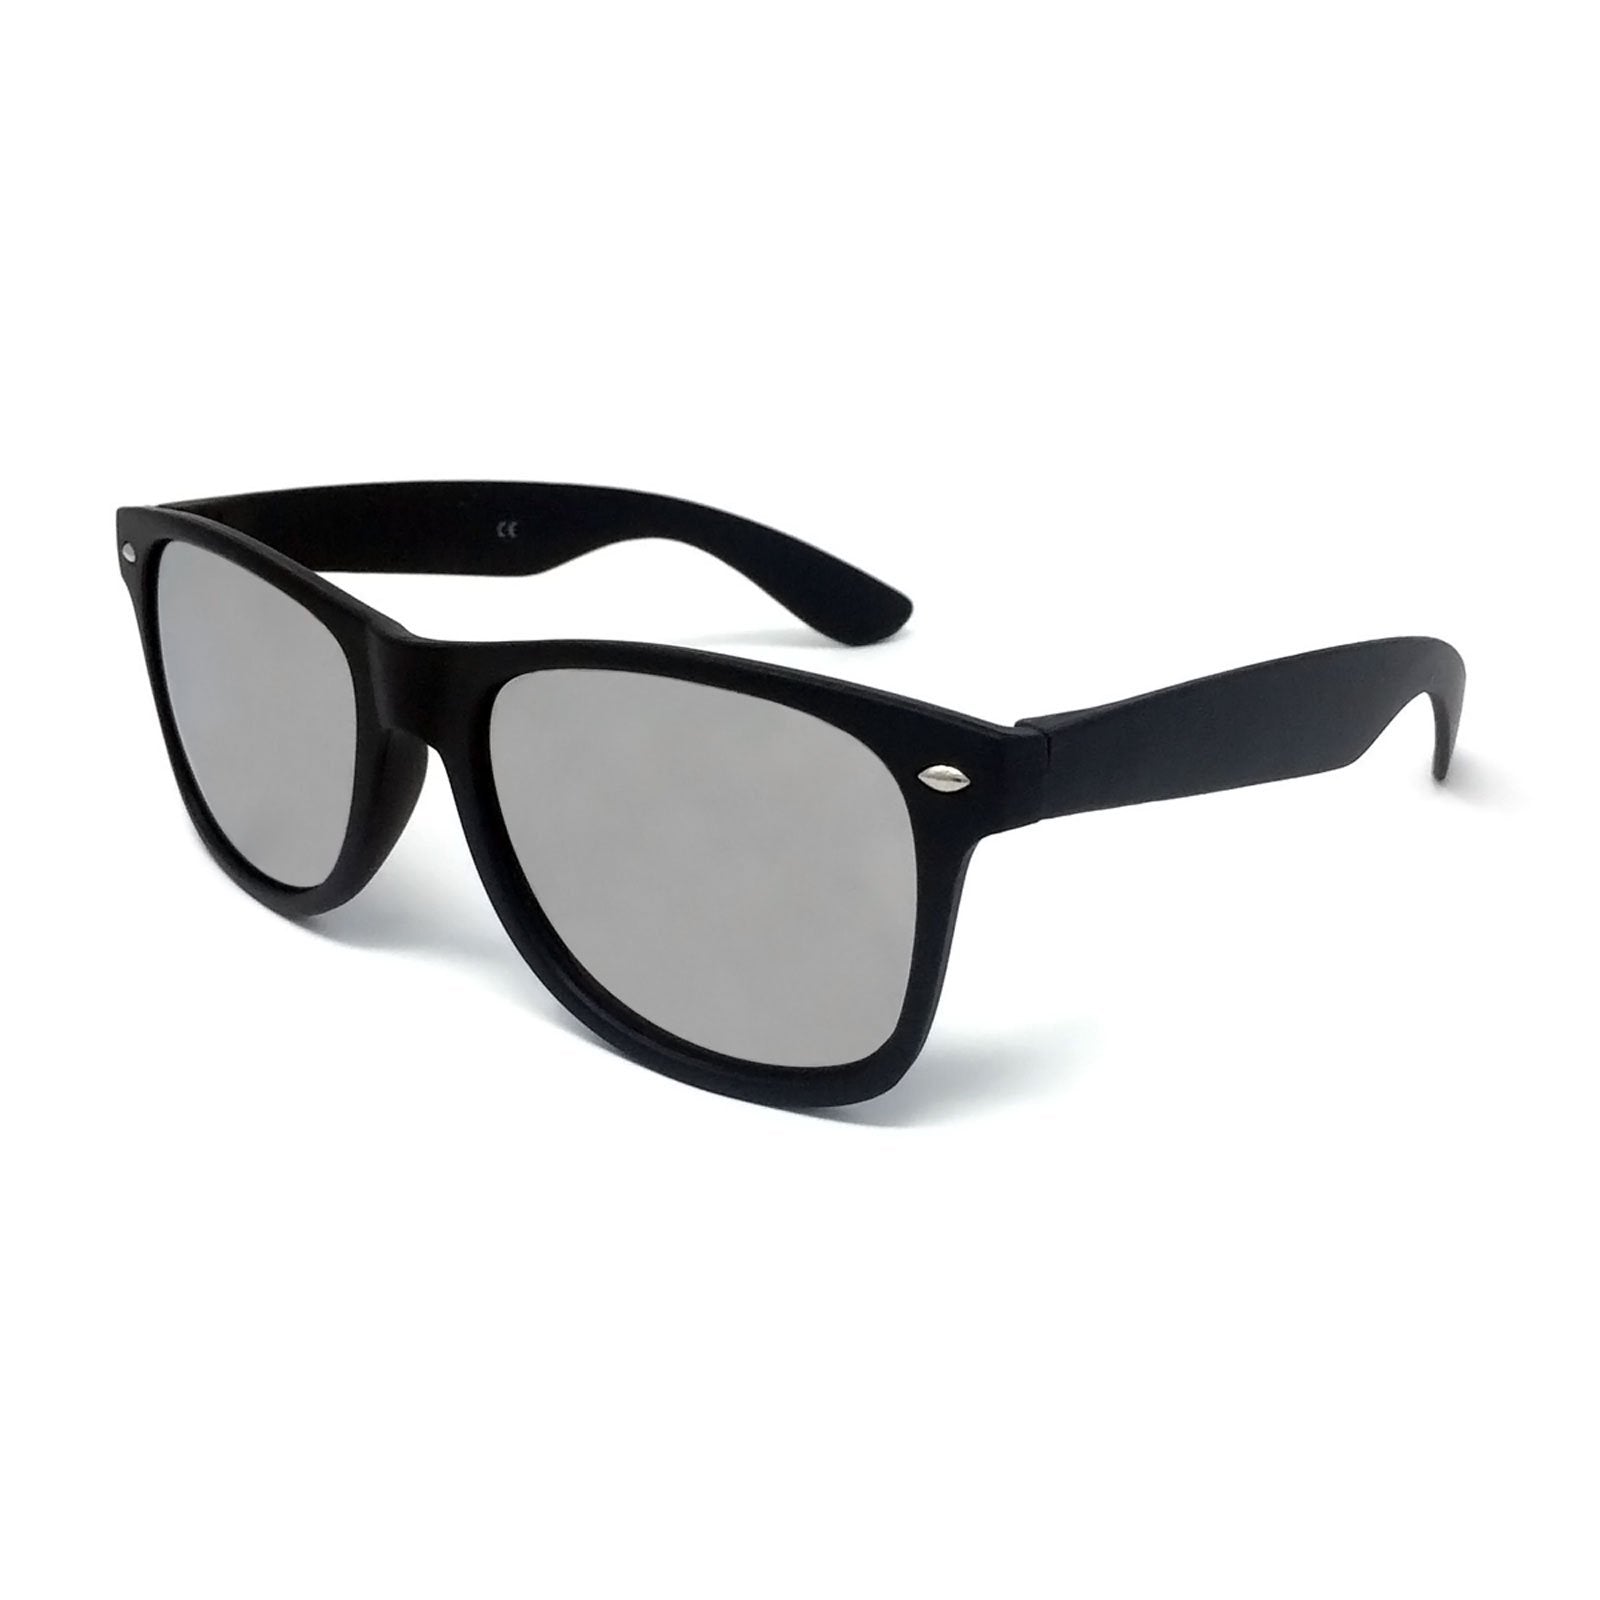 Wholesale Classic Sunglasses - Matte Black Frame, Silver Mirrored Lens